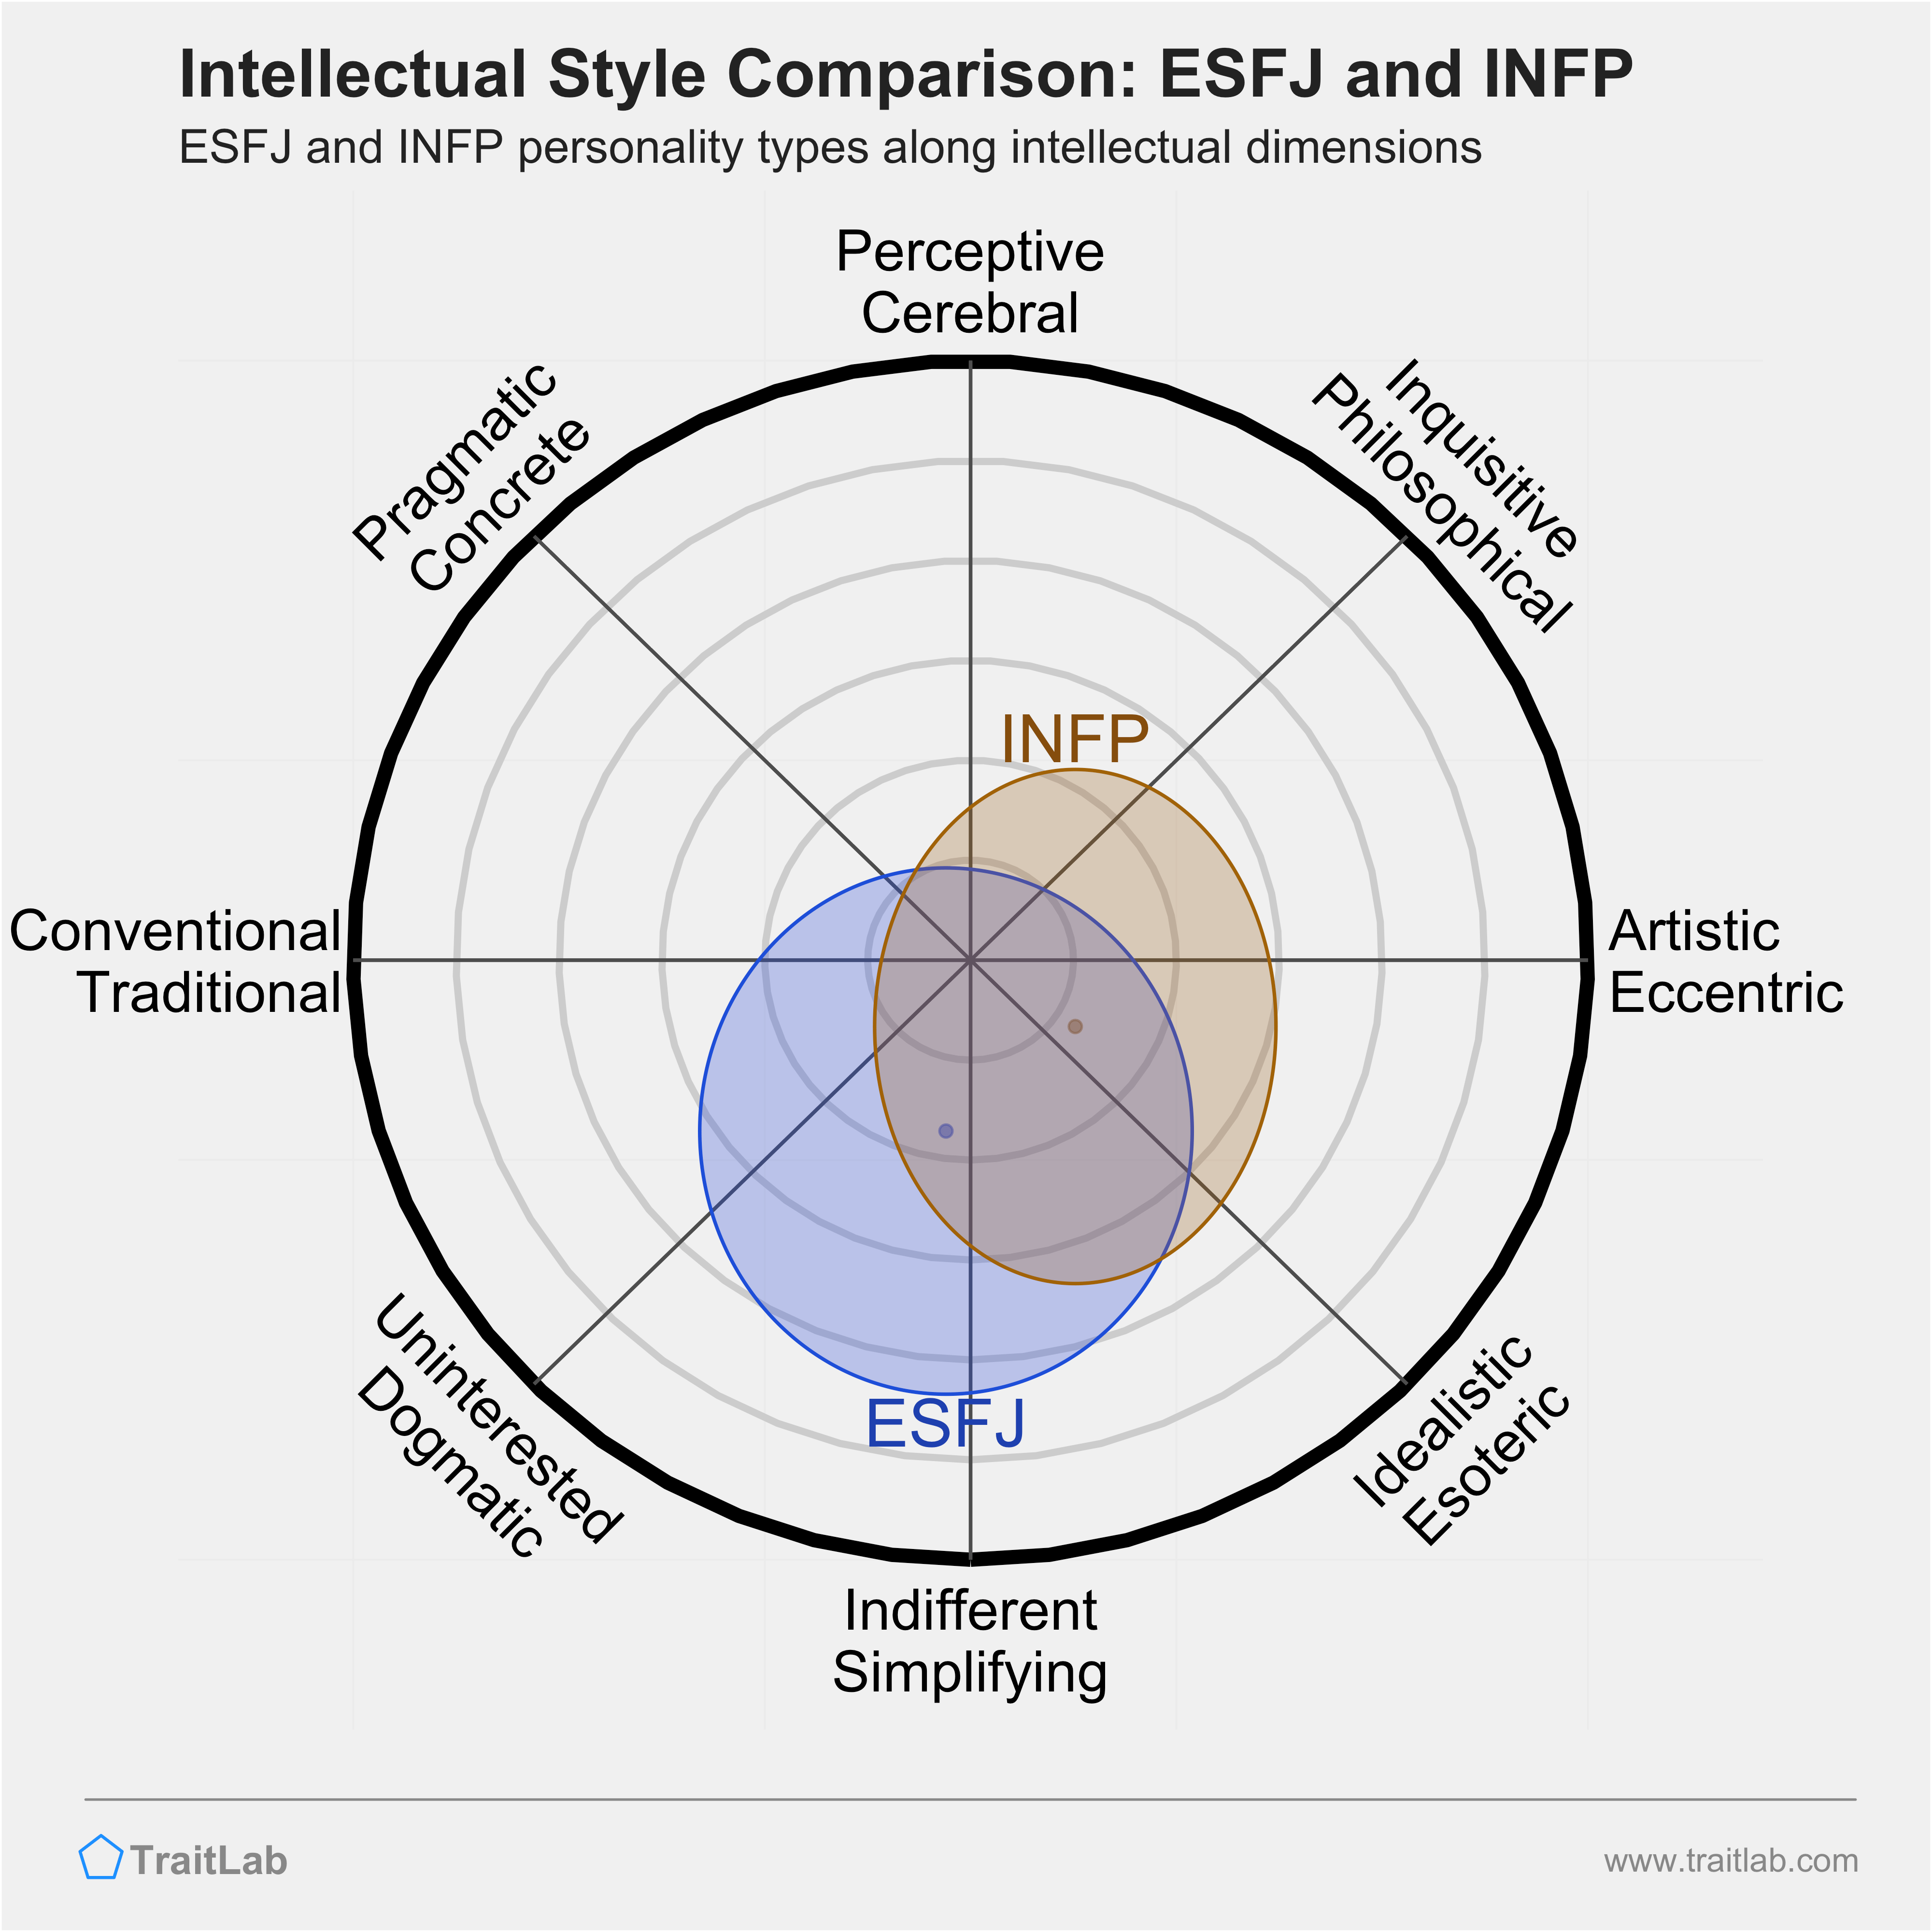 ESFJ and INFP comparison across intellectual dimensions